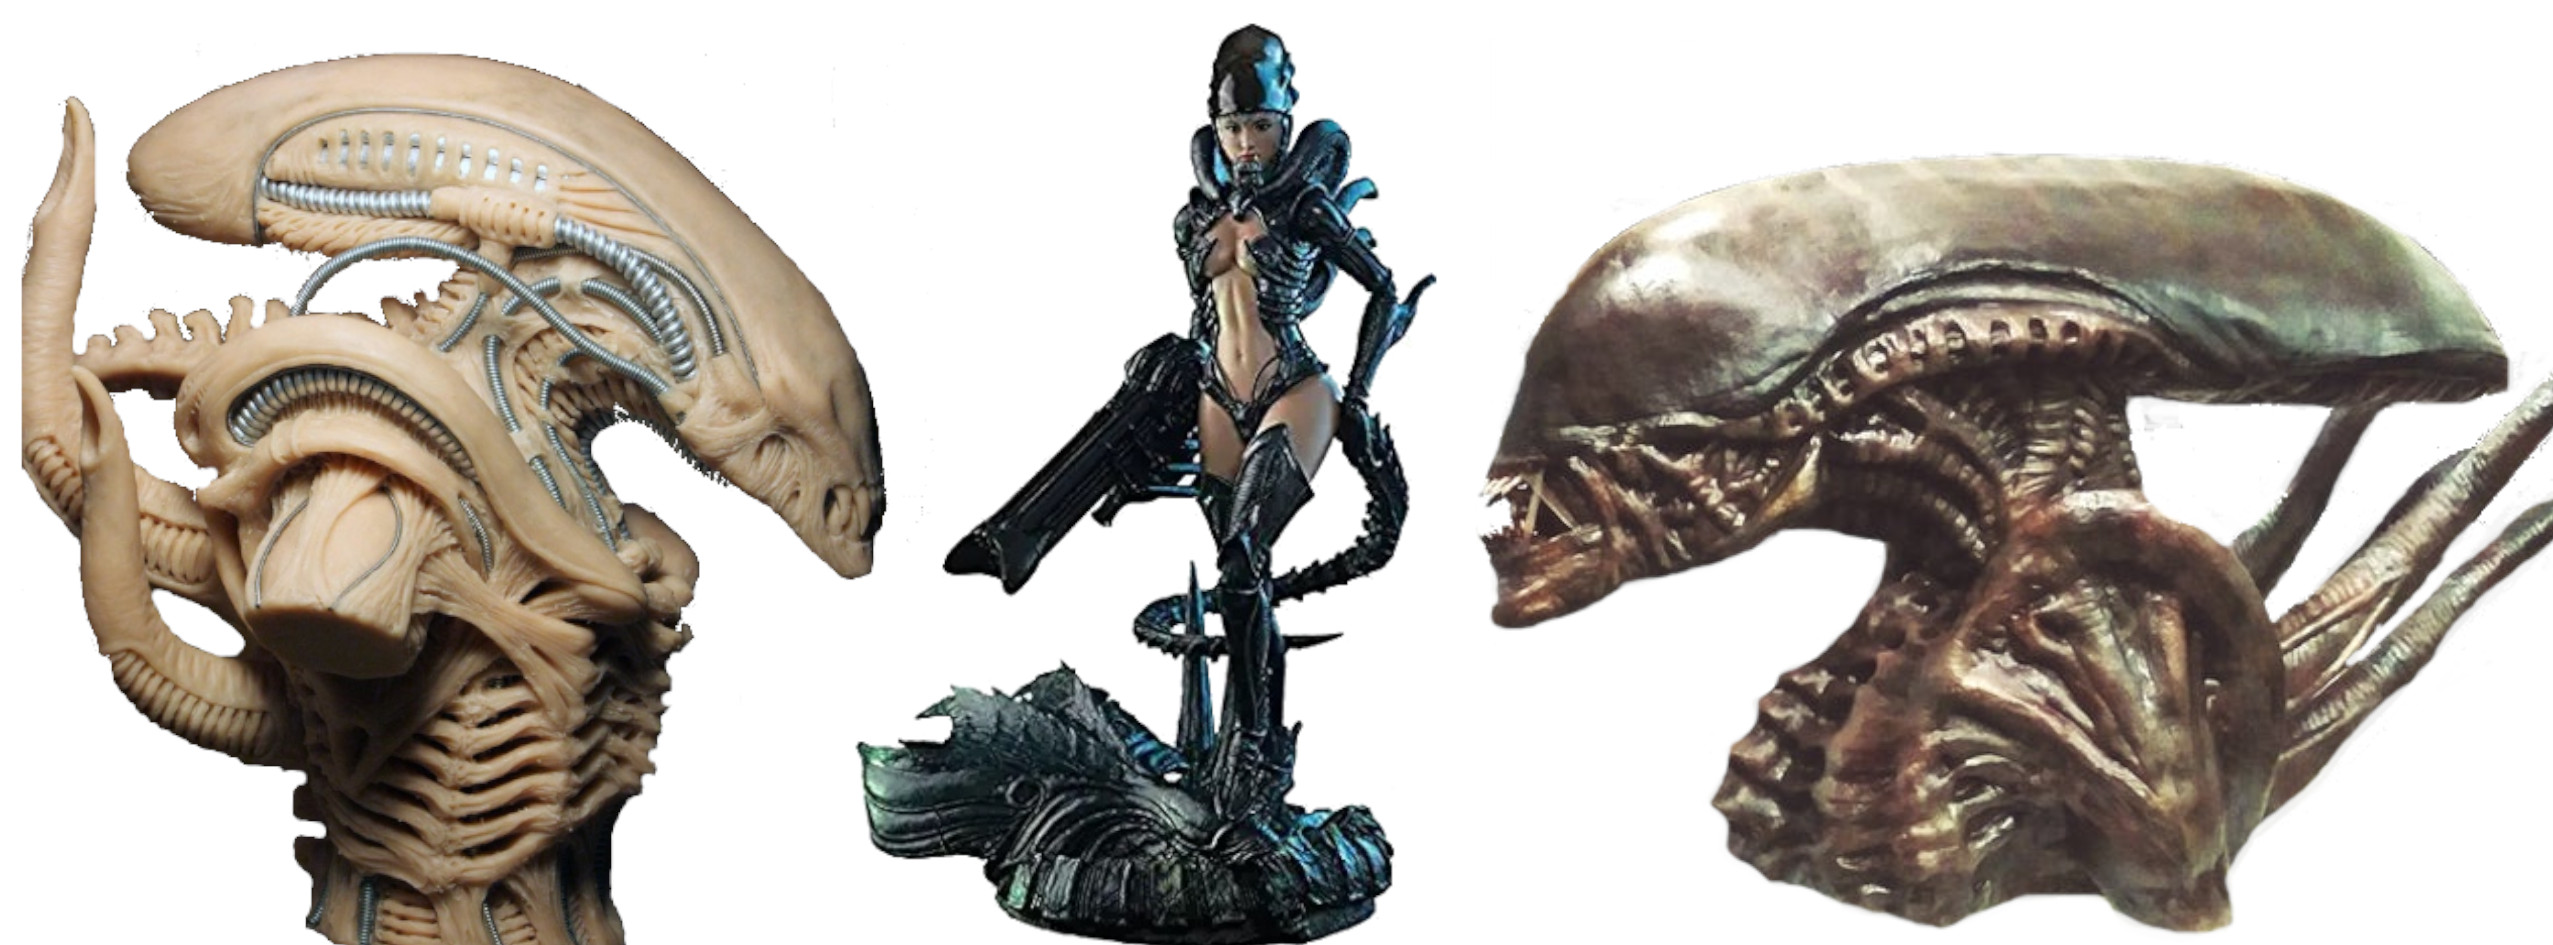 Figuras de alien, estatuas de alien, bustos de alien, figuras coleccionables de alien, hot toys de alien, NECA AVP, NECA Alien